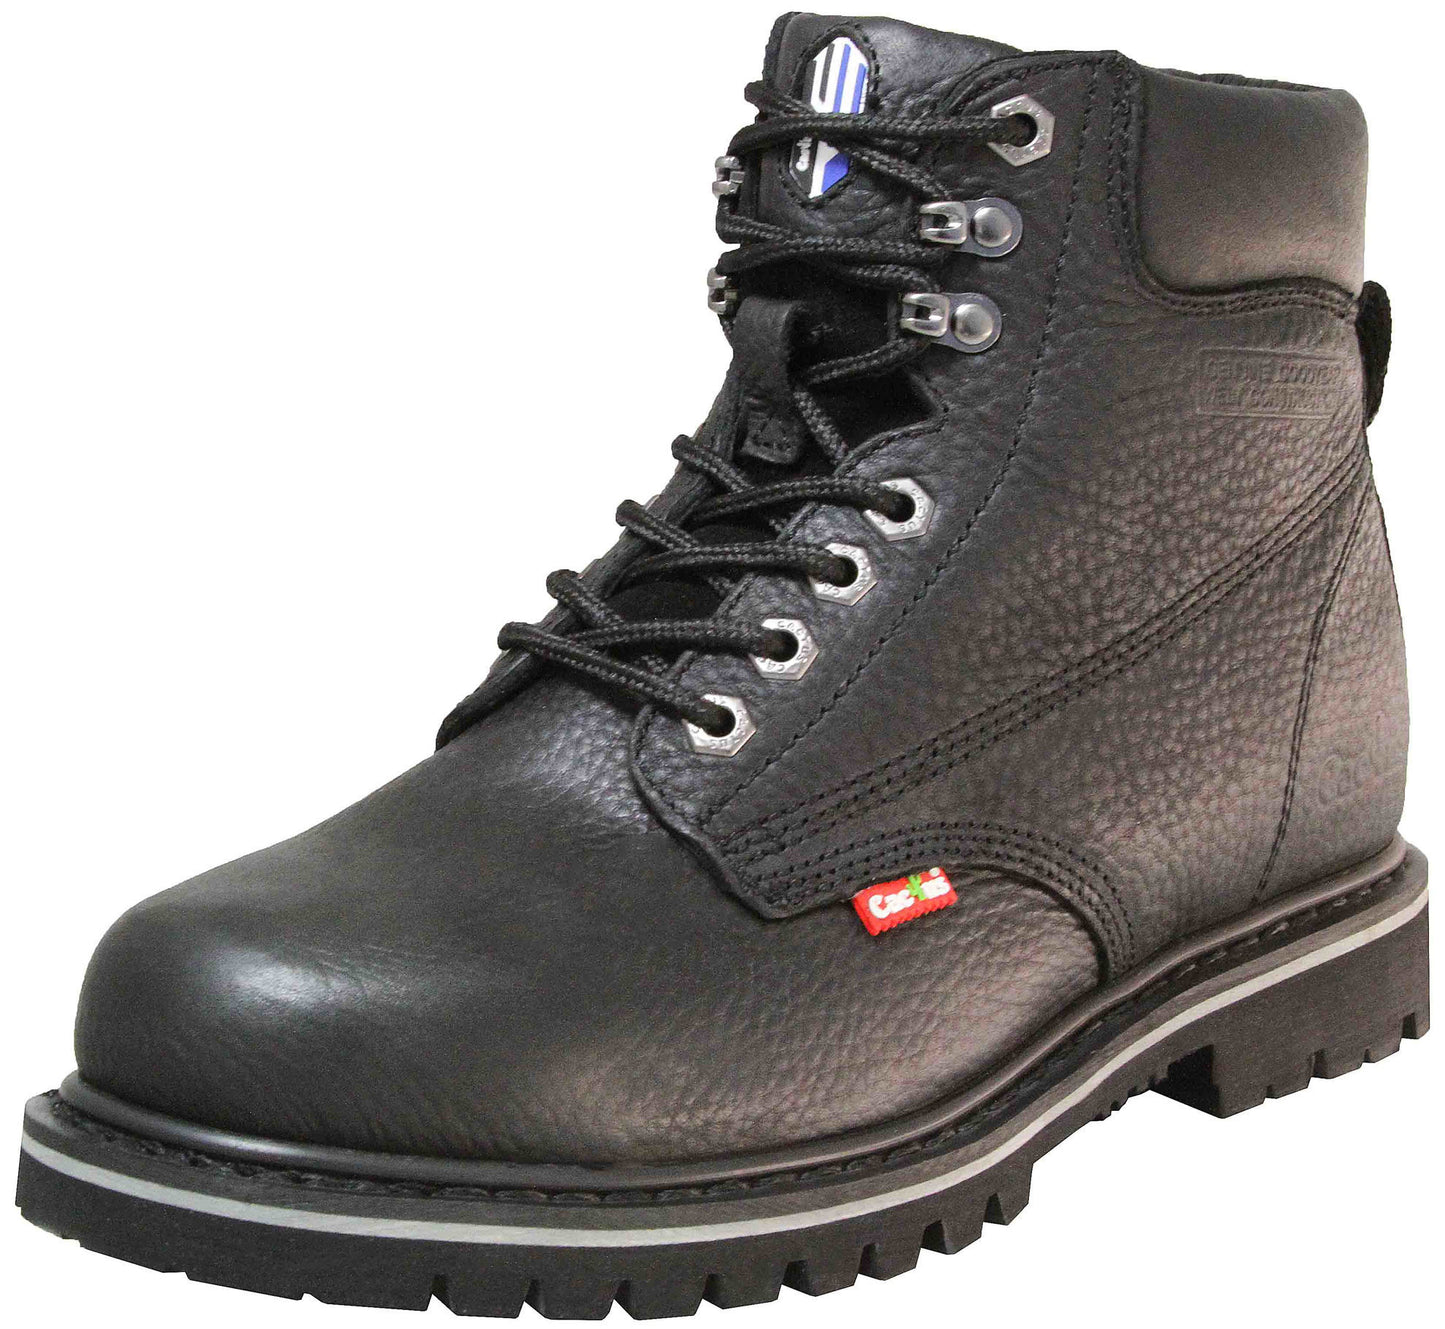 Cactus Men 6" Soft Toe Oil Resistant Work Boot Black 6229-BLK